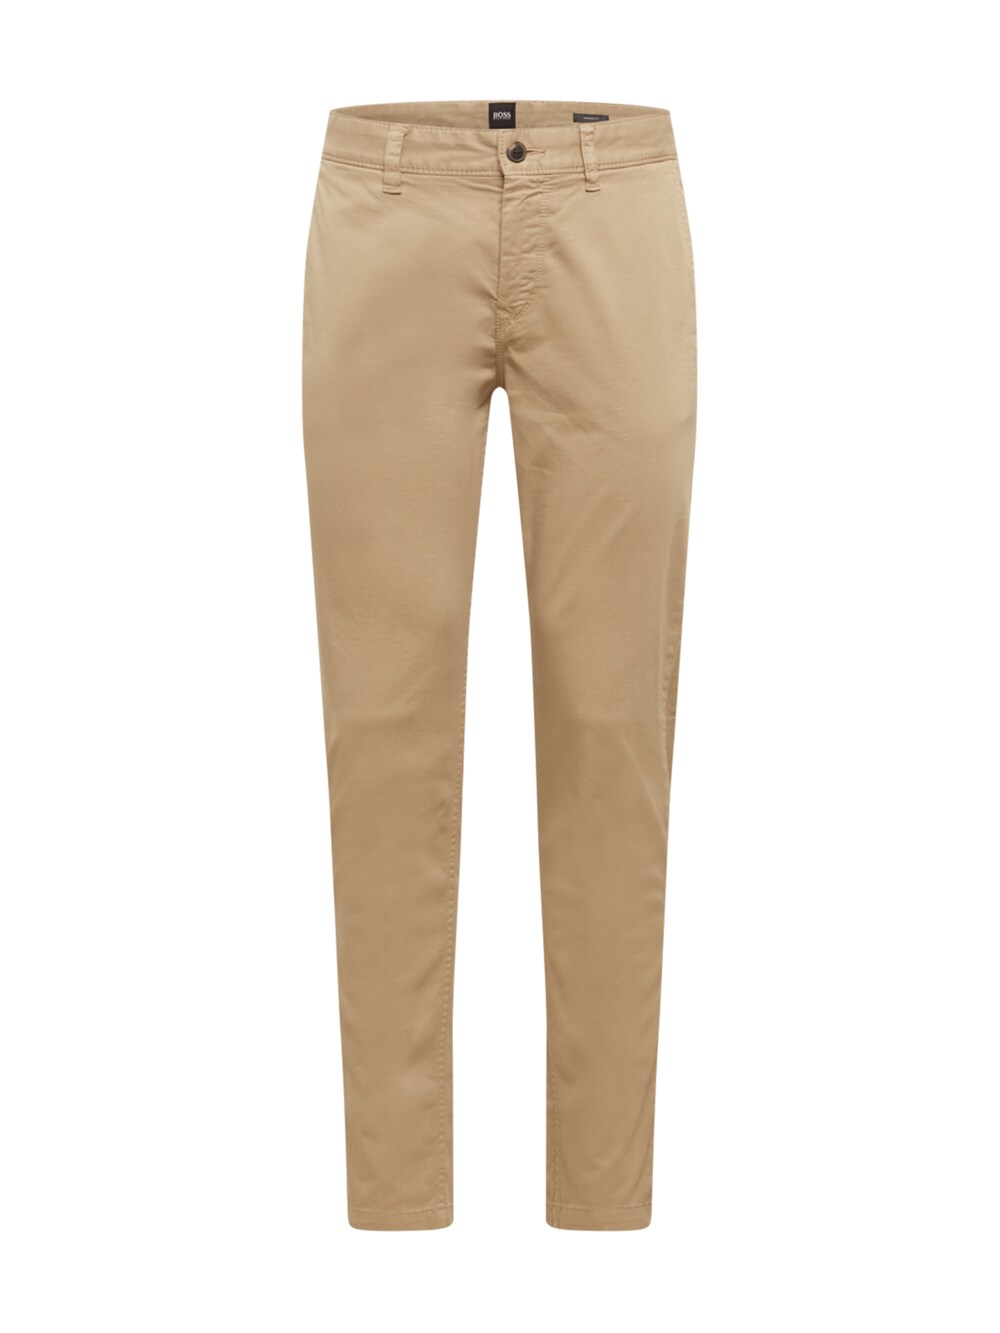 Узкие брюки BOSS Orange Schino-Taber D, светло-коричневый